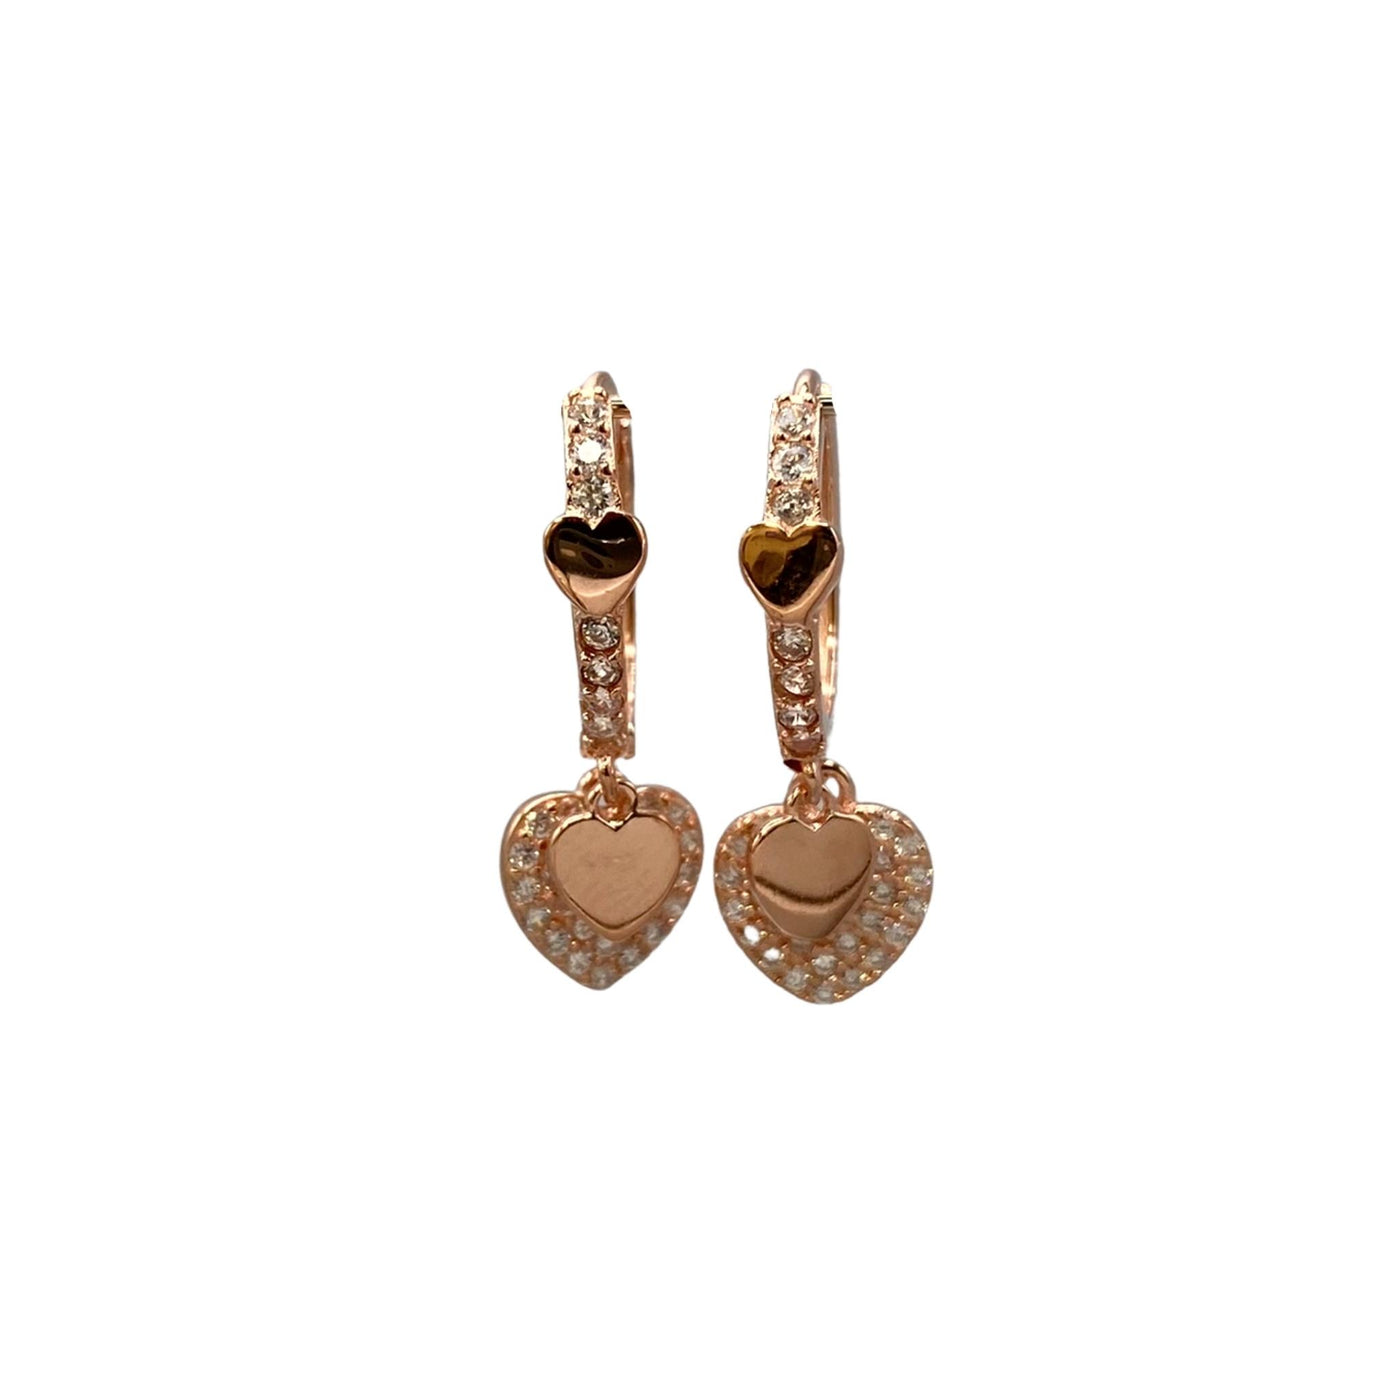 Silver hoop earrings with hearts